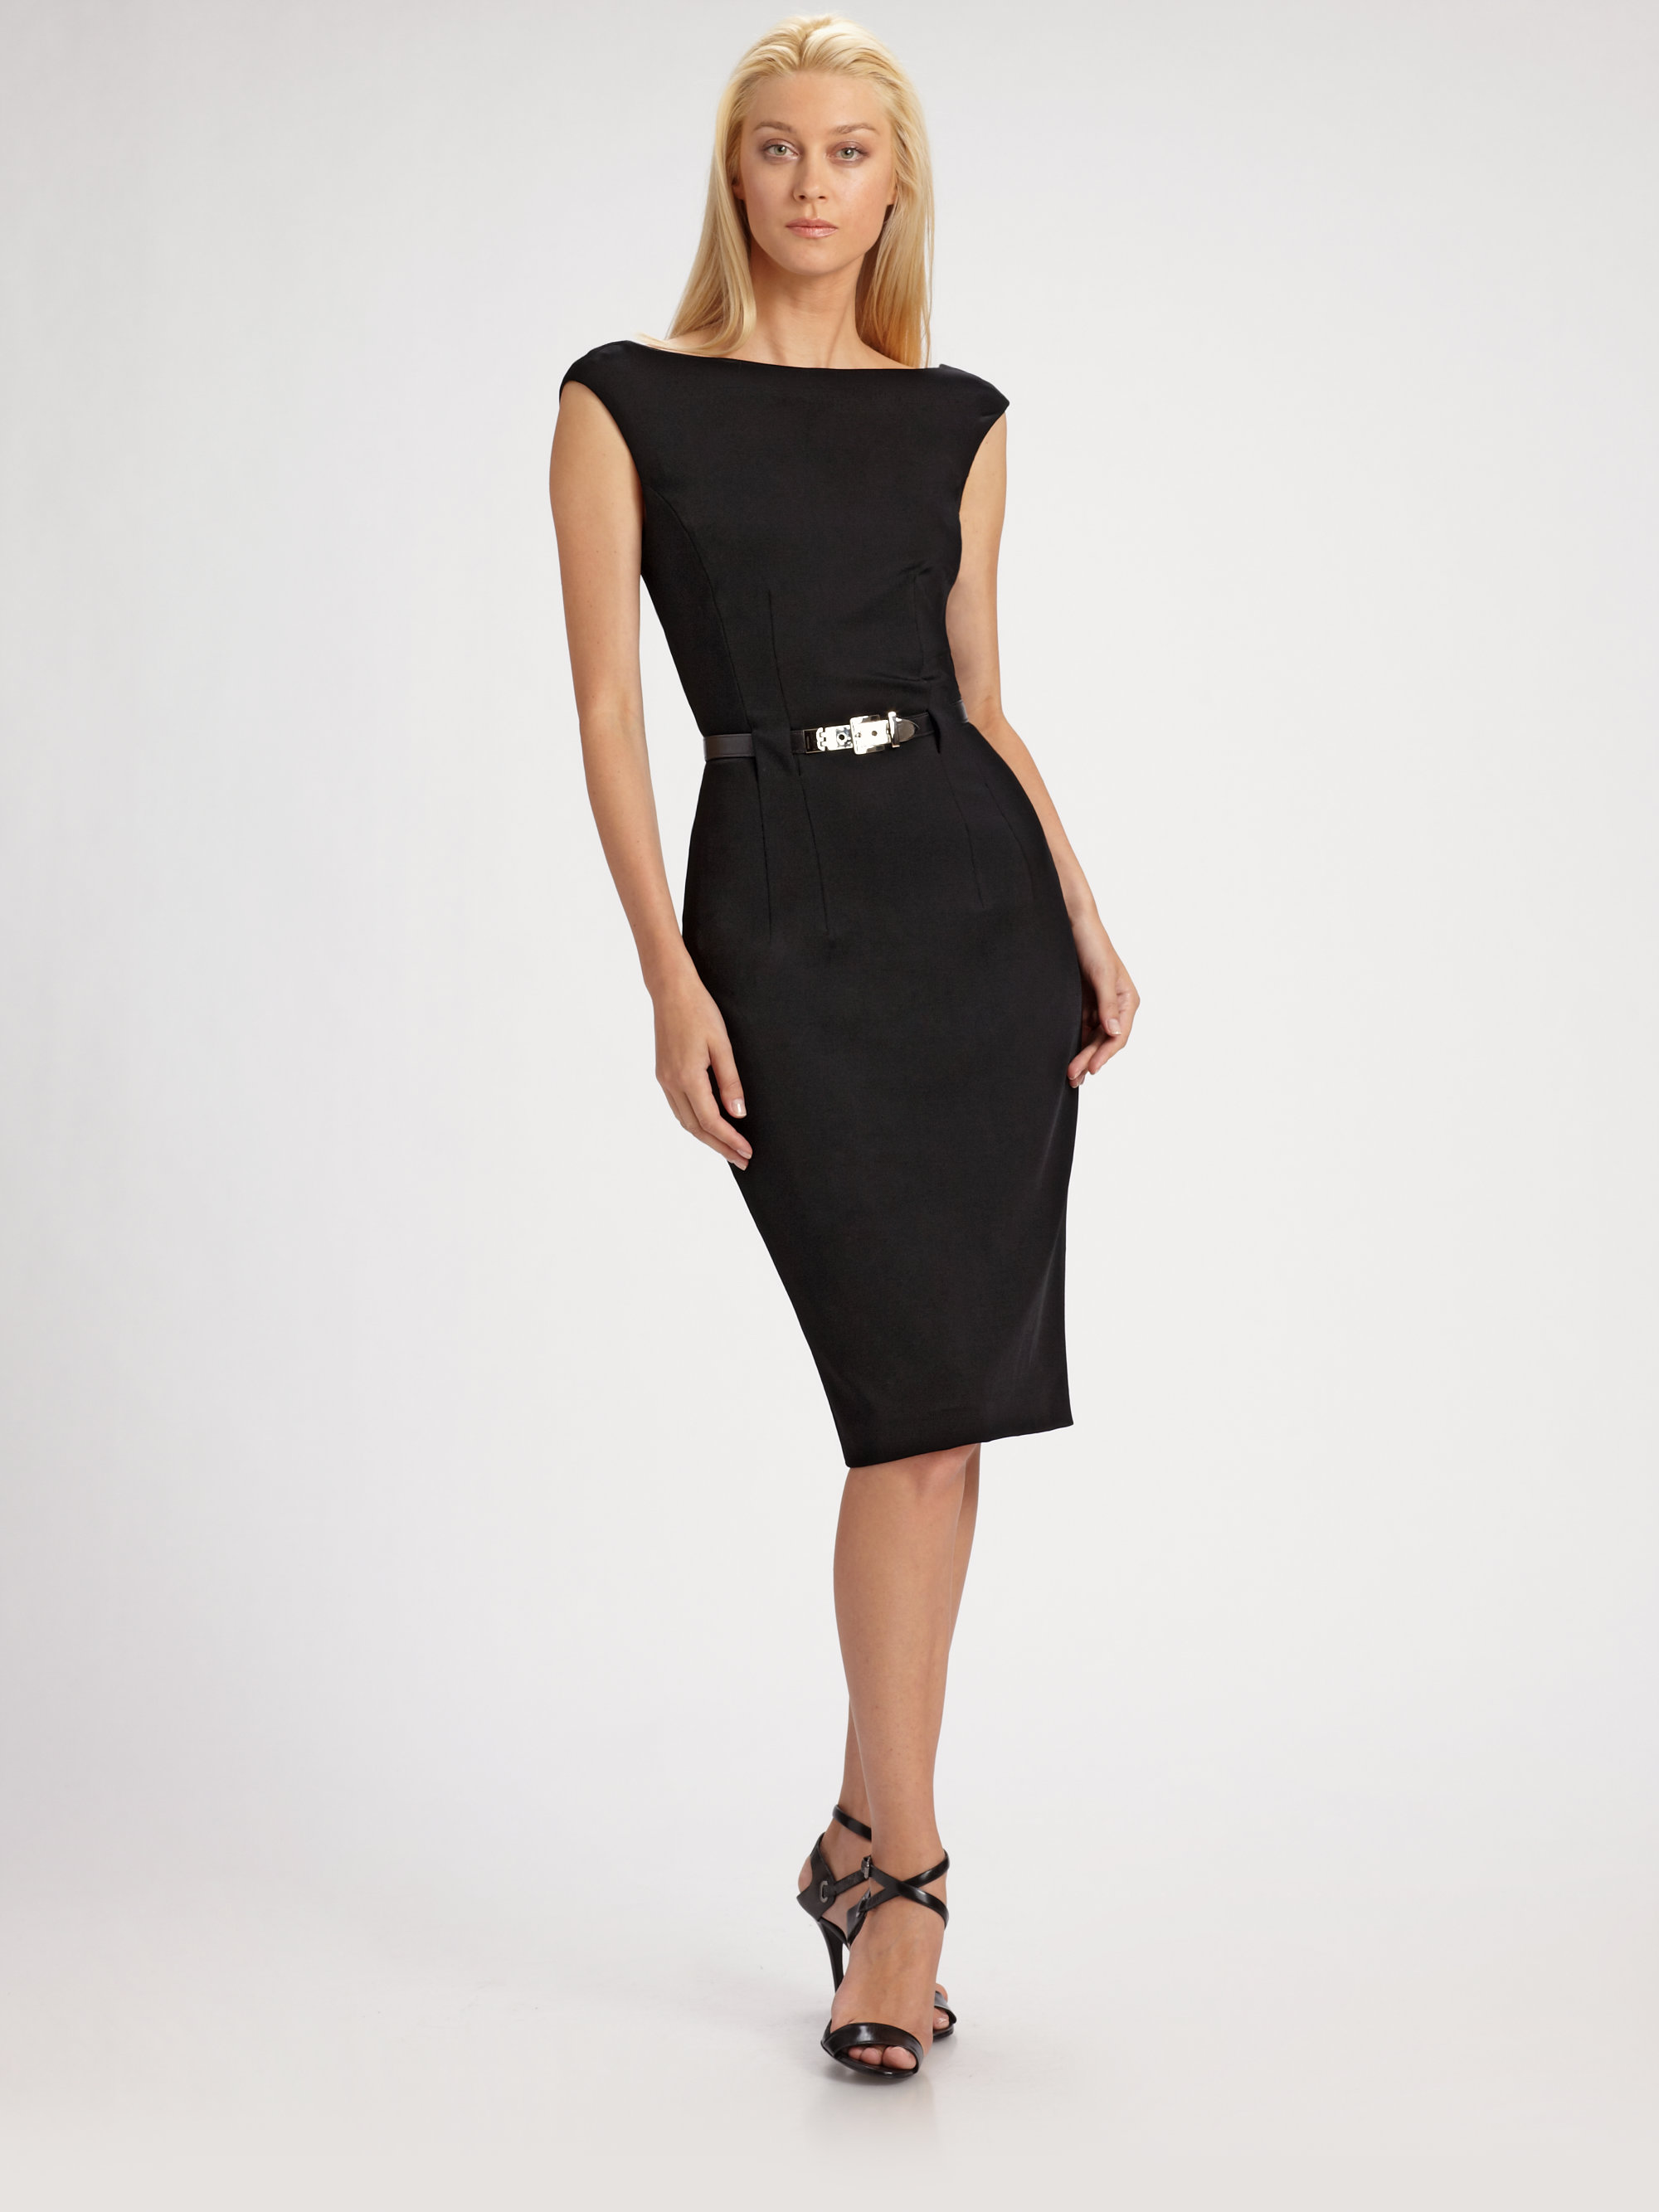 Ralph lauren black label Irina Belted Jersey Dress in Black | Lyst